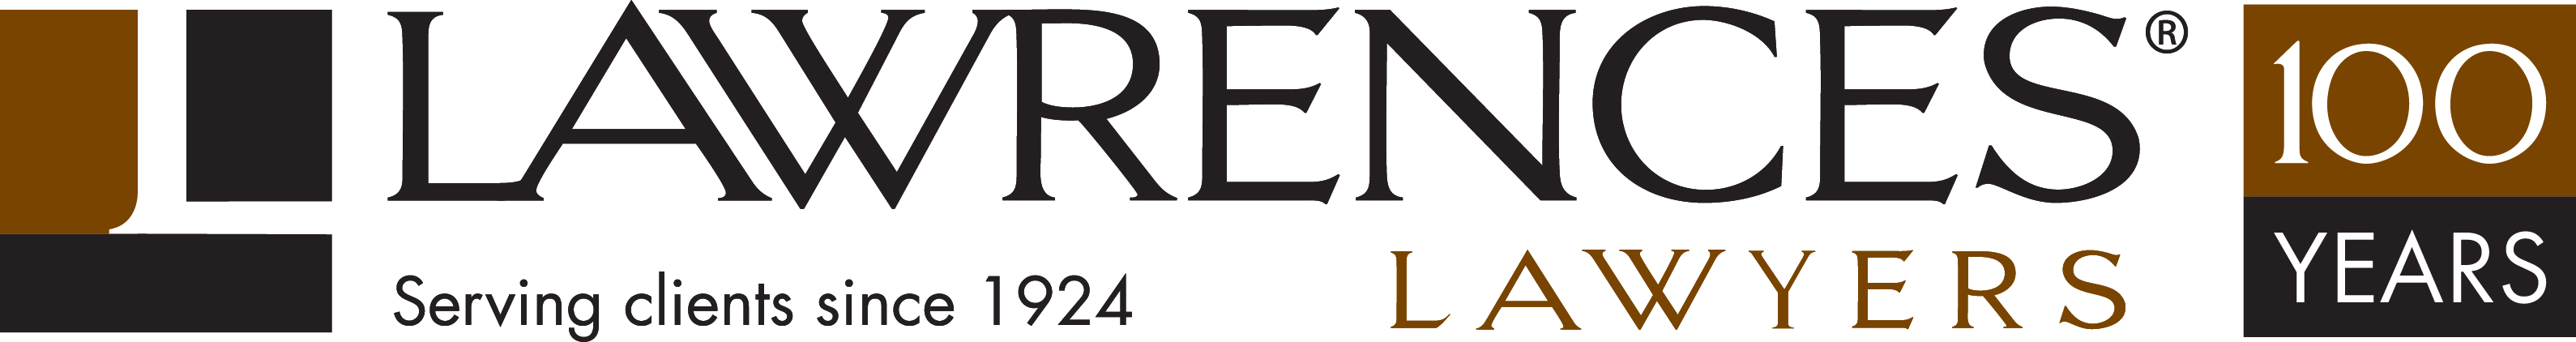 lawrences-100-anniversary-wordmark-RBG-HEX